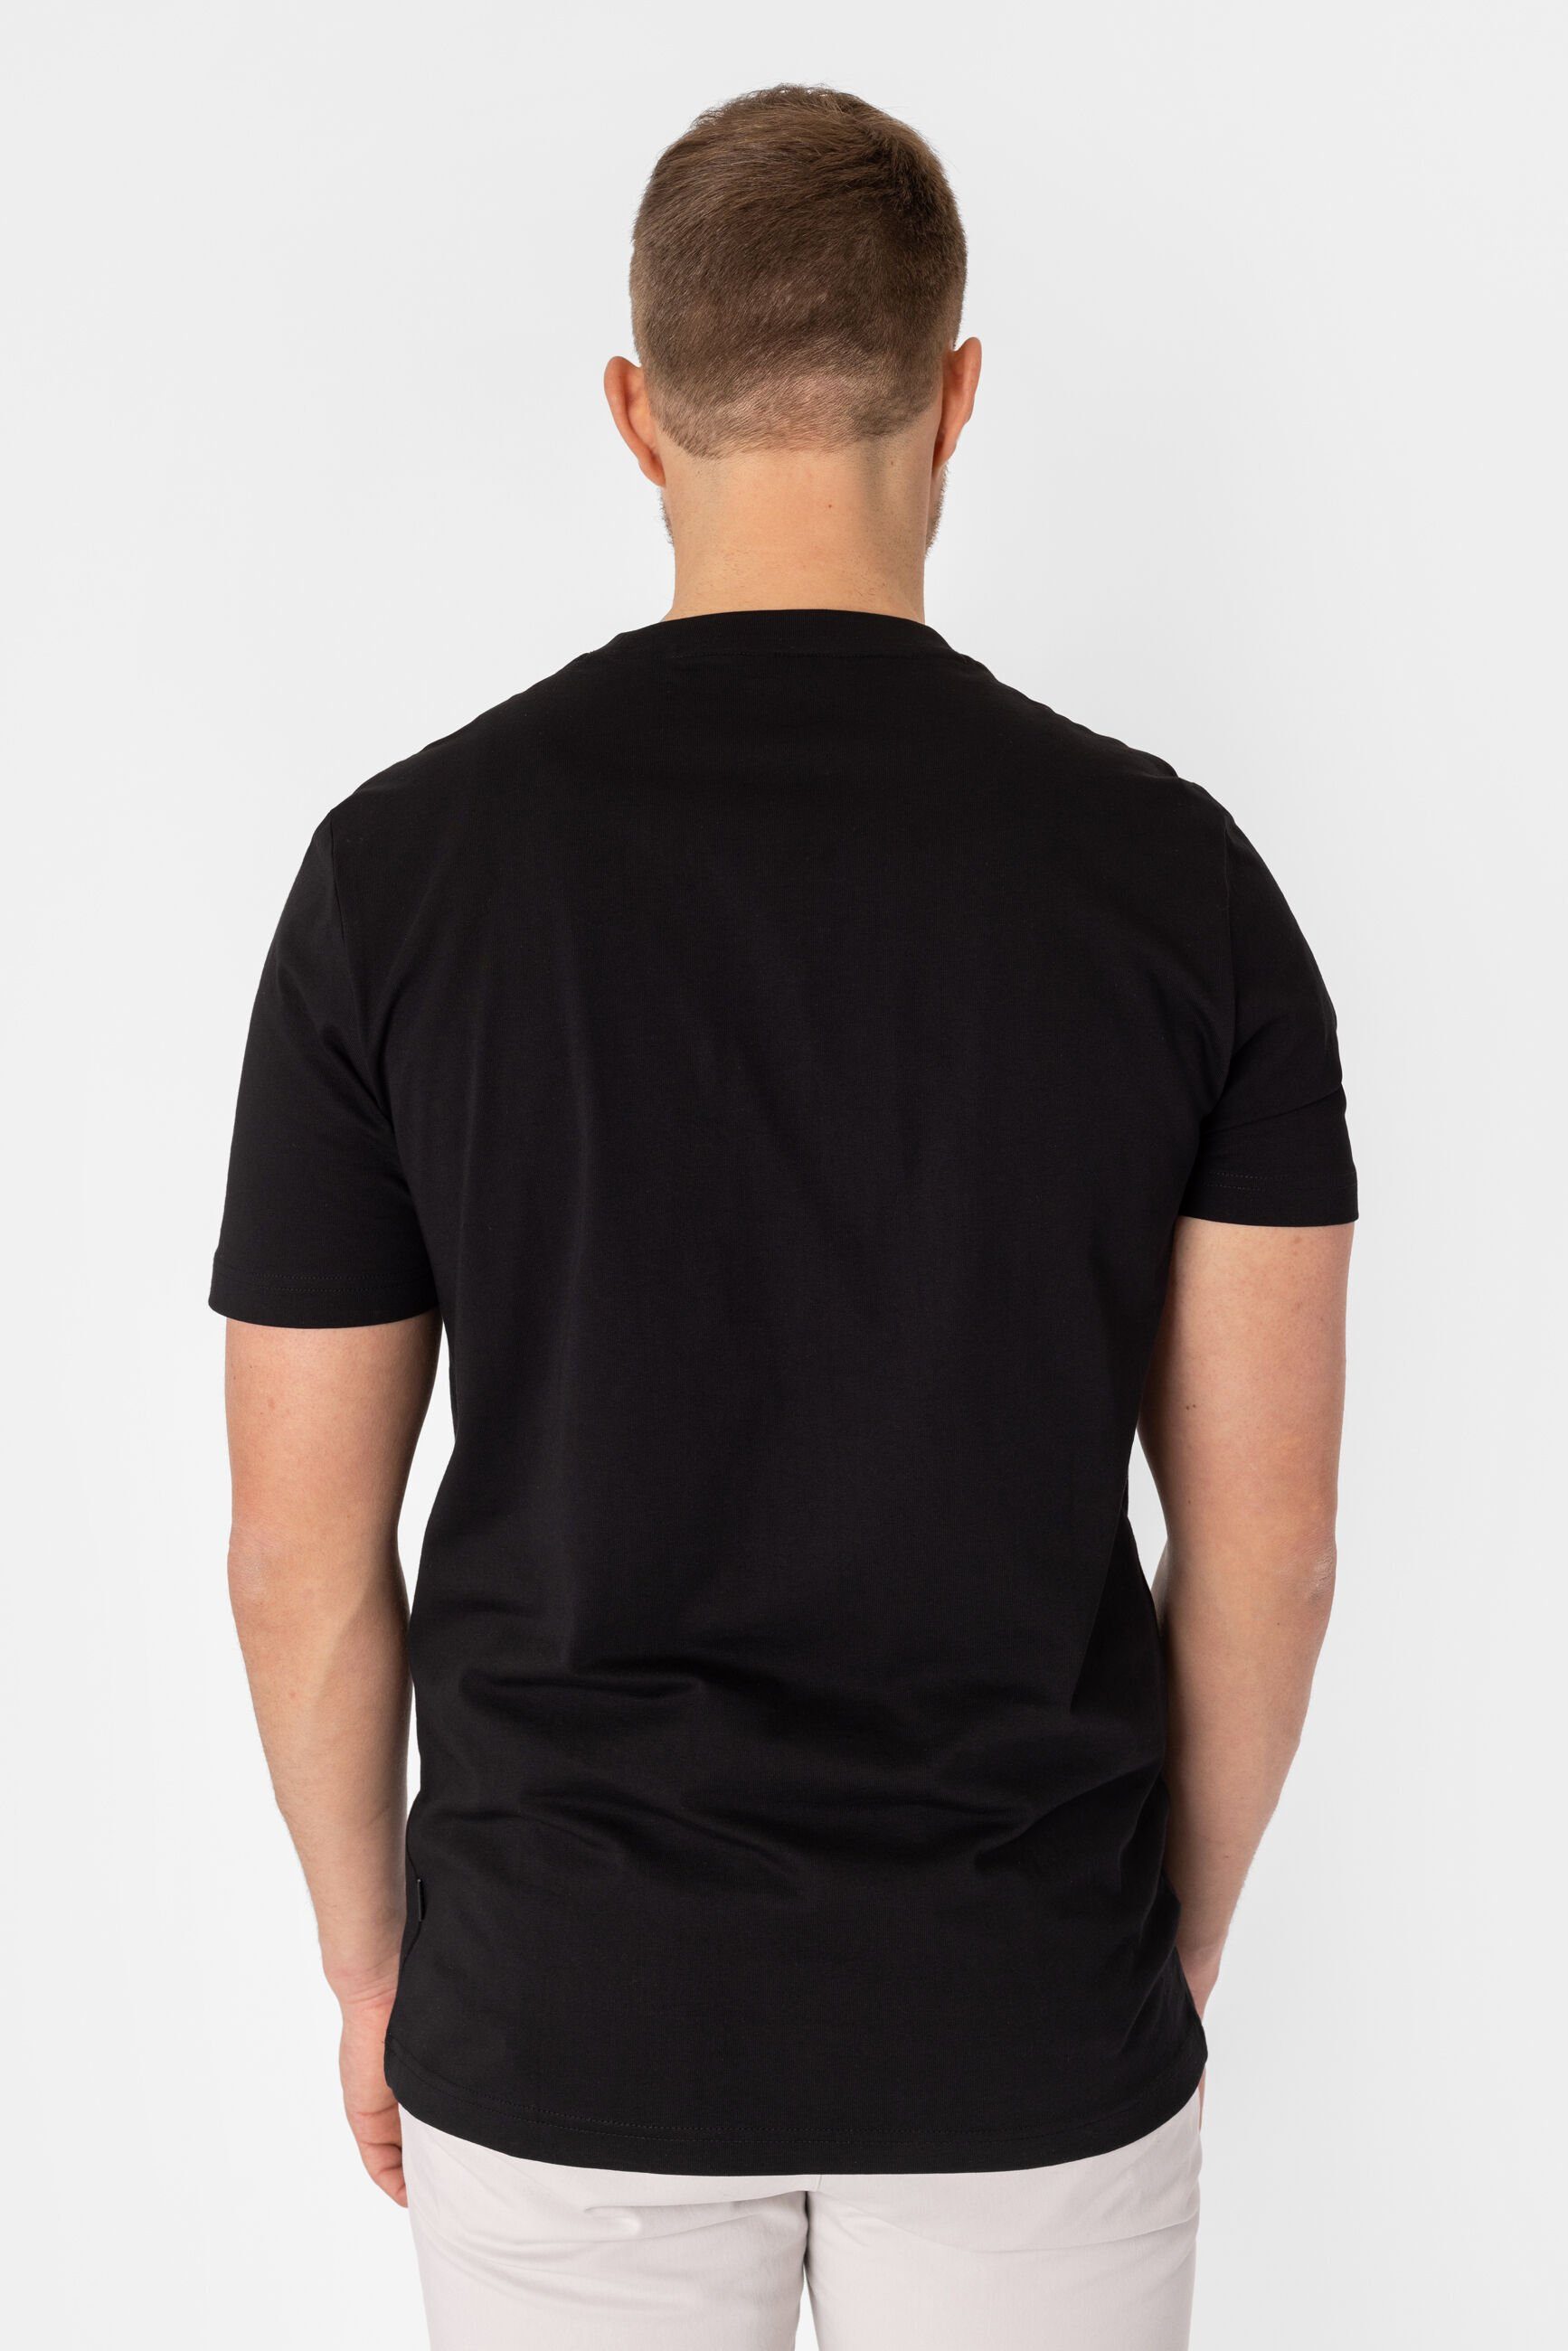 BOSS T-Shirt Tiburt Schwarz (001)